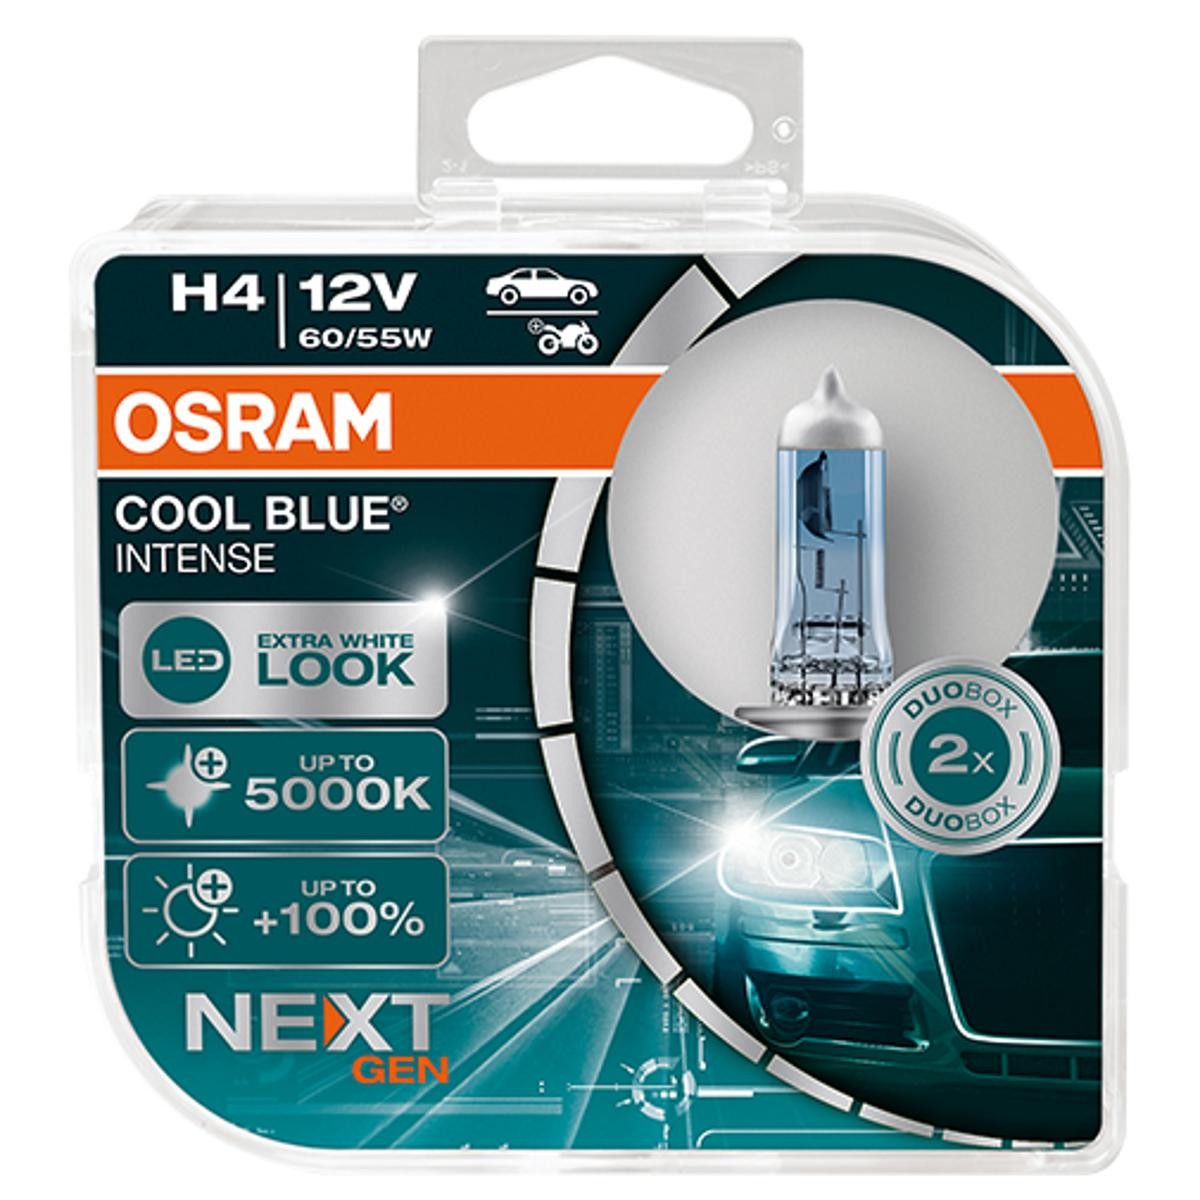 Headlight bulb OSRAM COOL BLUE INTENSE next Generation H4 12V 60/55W P43t, 5000K, Halogen - 64193CBN-HCB